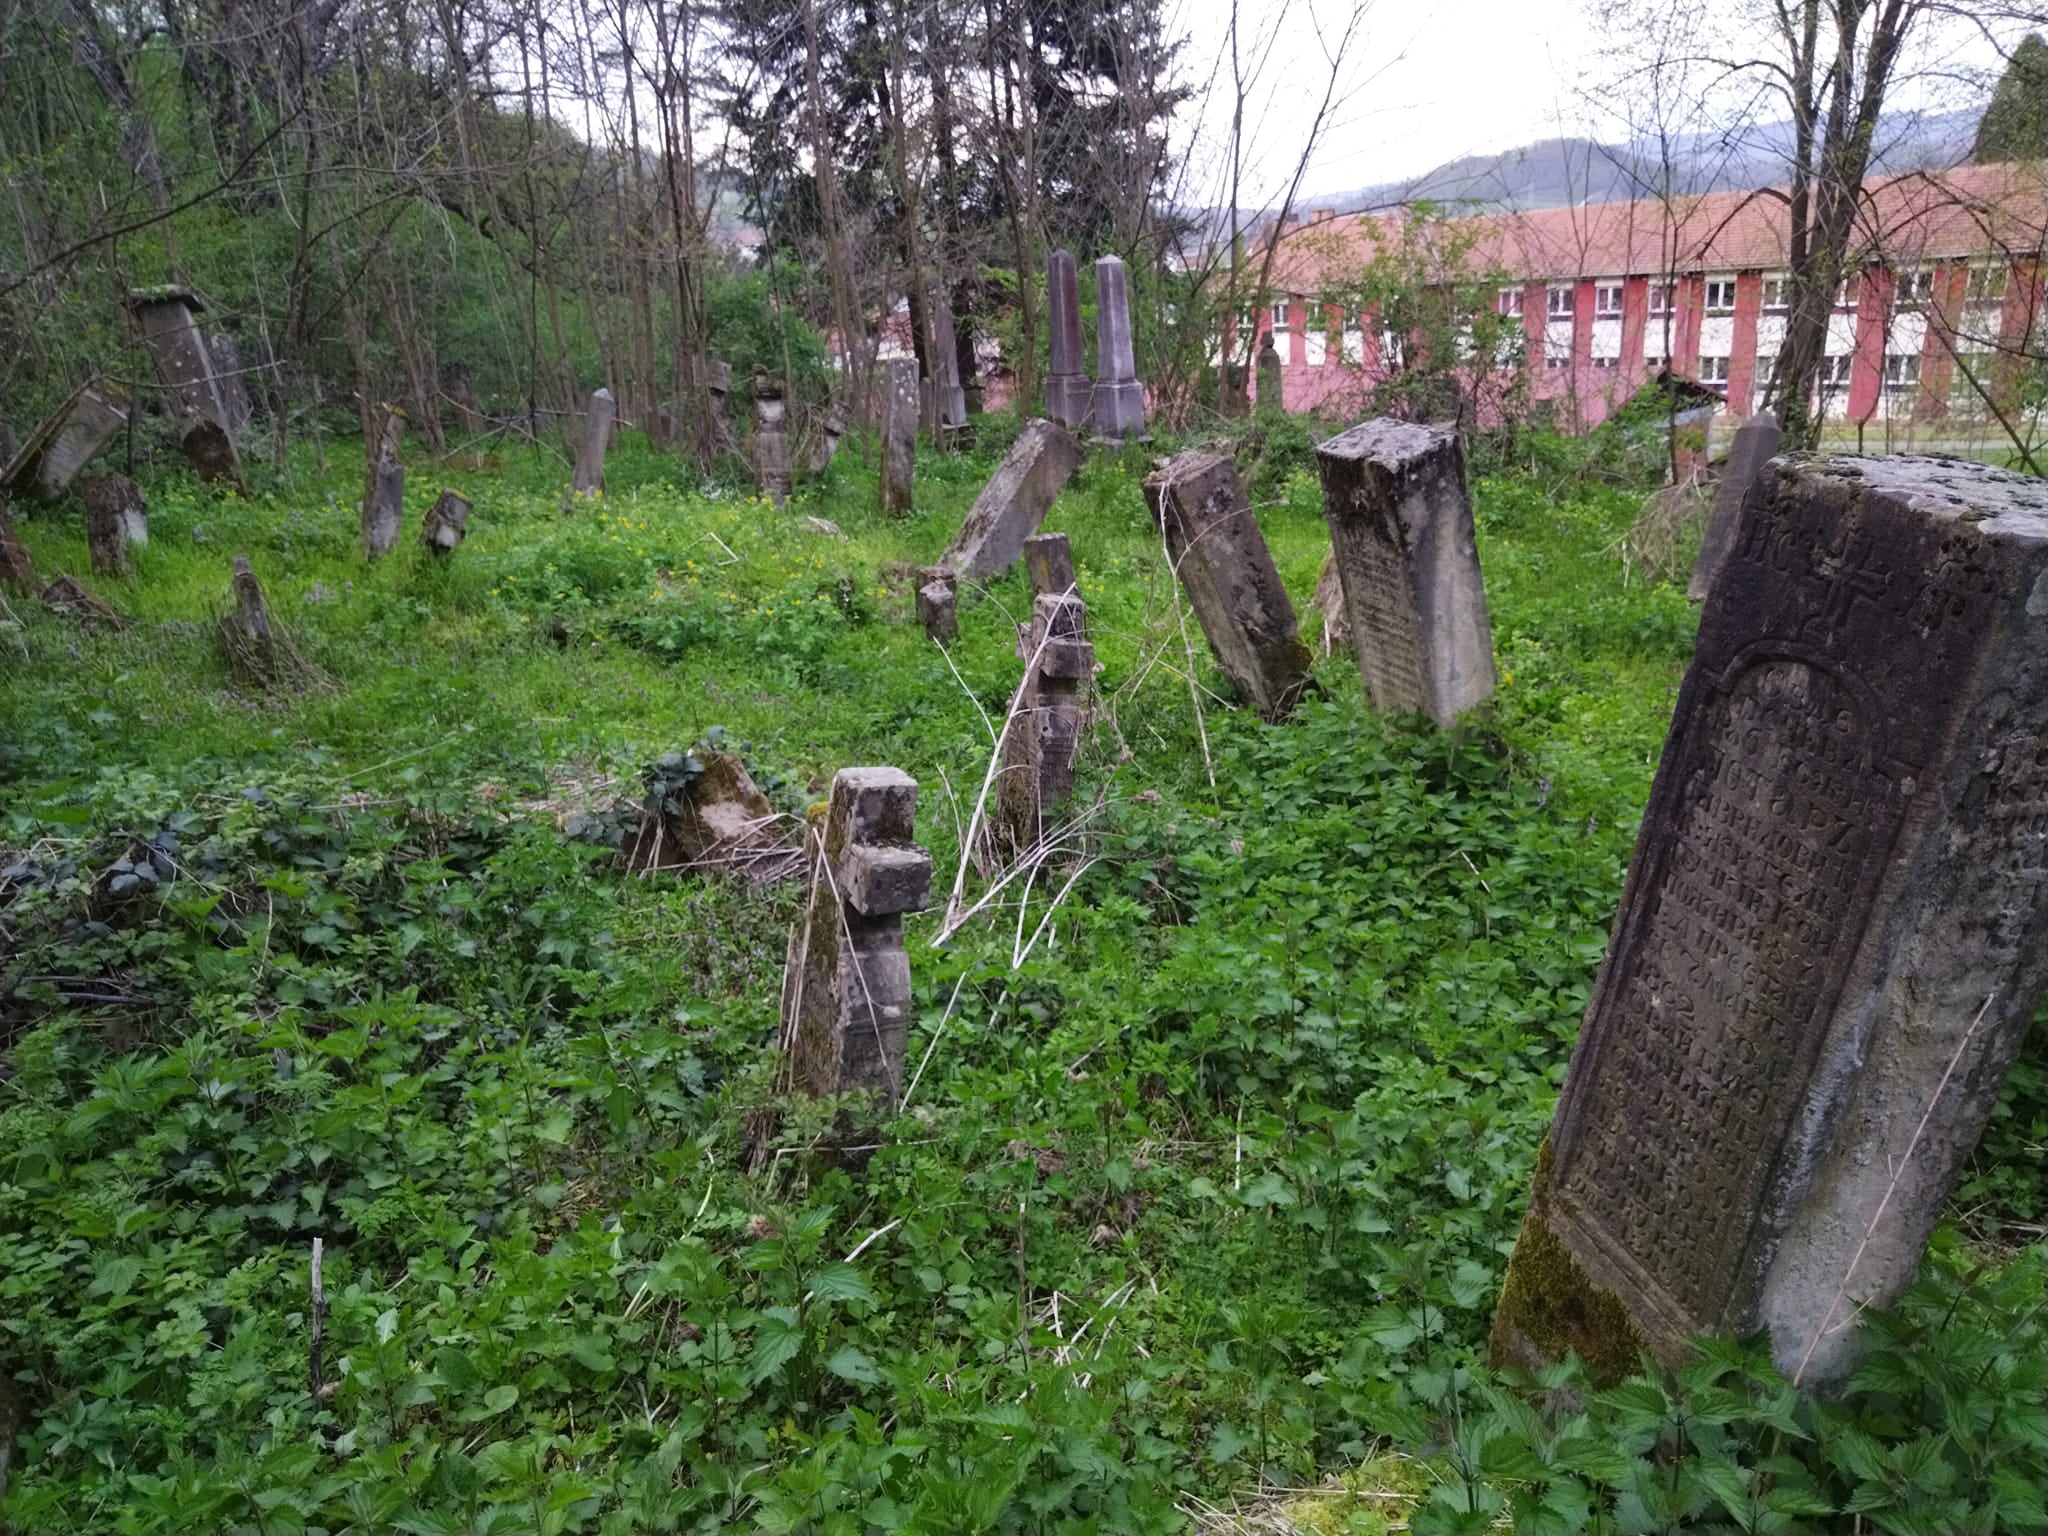 Staro gučko Varoško groblje, tužna slika naših dana (FOTO)